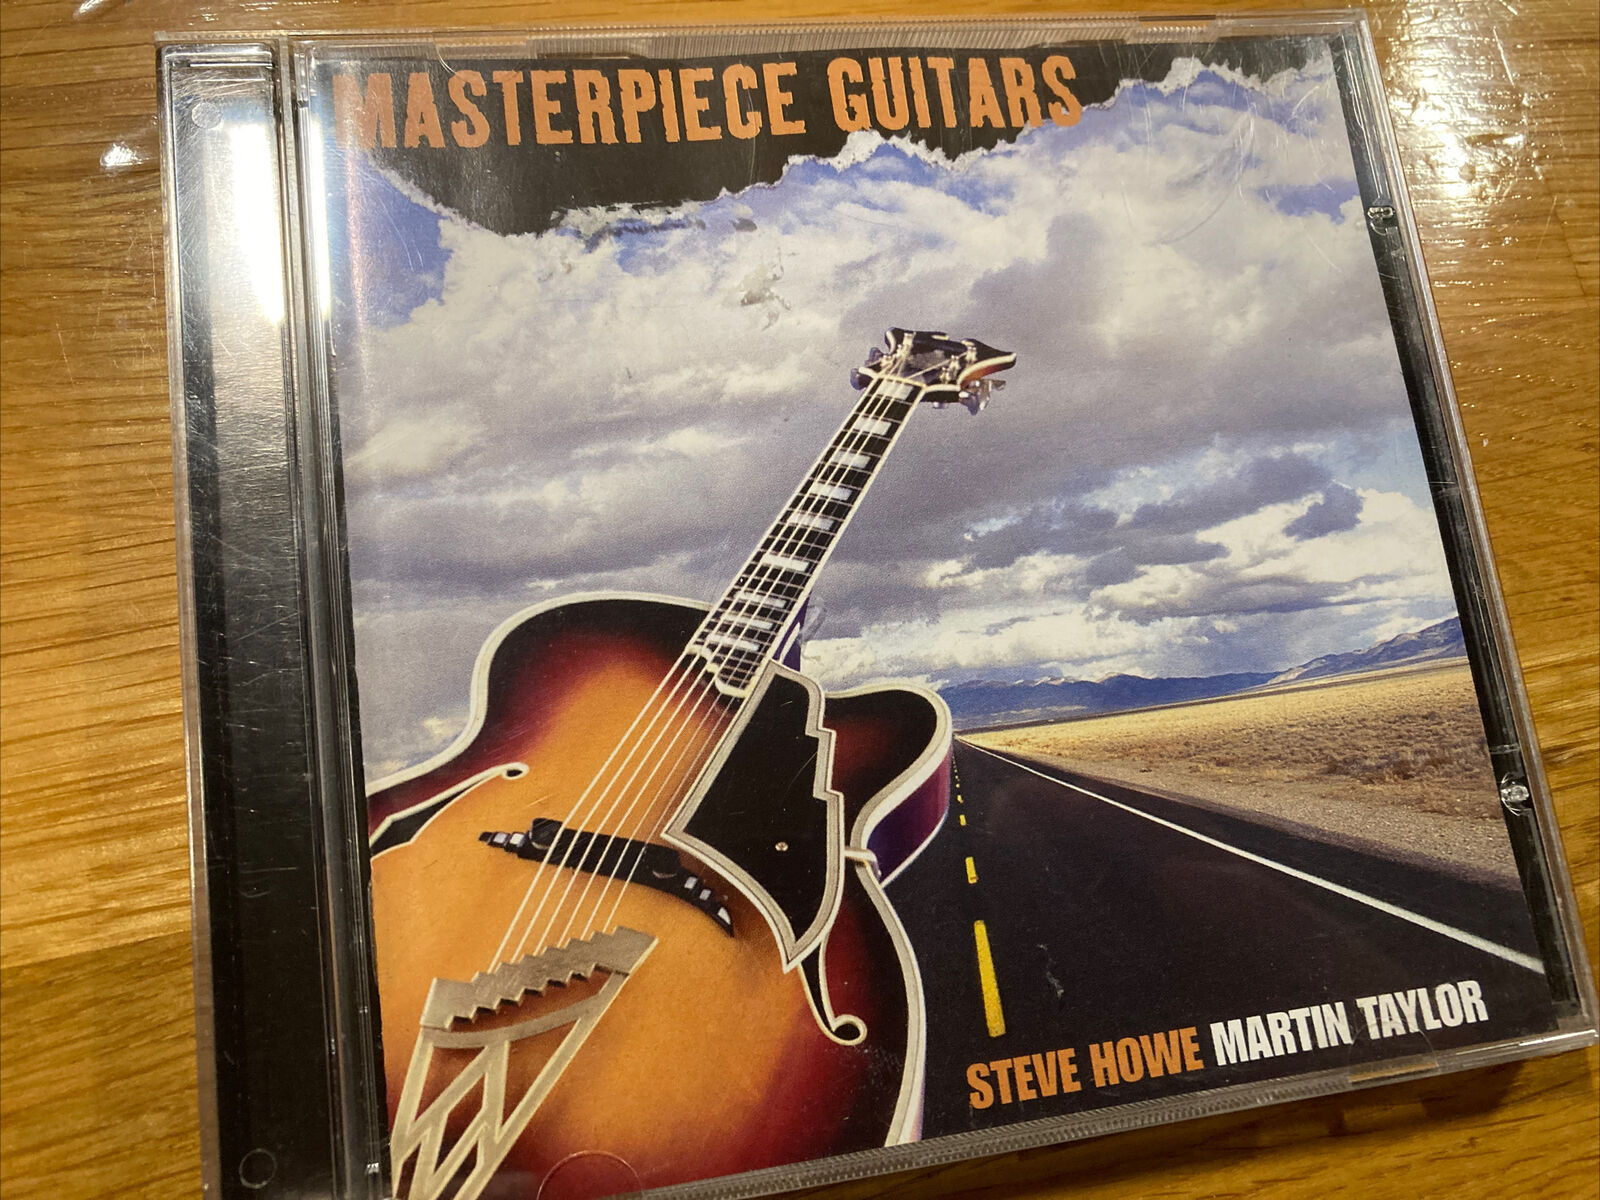 Steve Howe Martin Taylor - Masterpiece Guitars (2003)